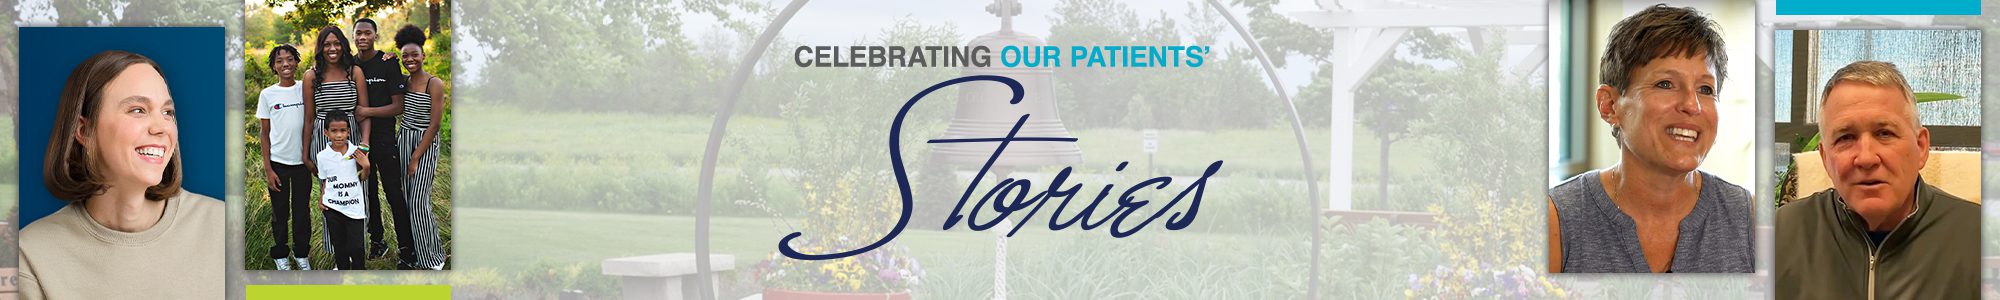 Celebrating Our Patients' Stories